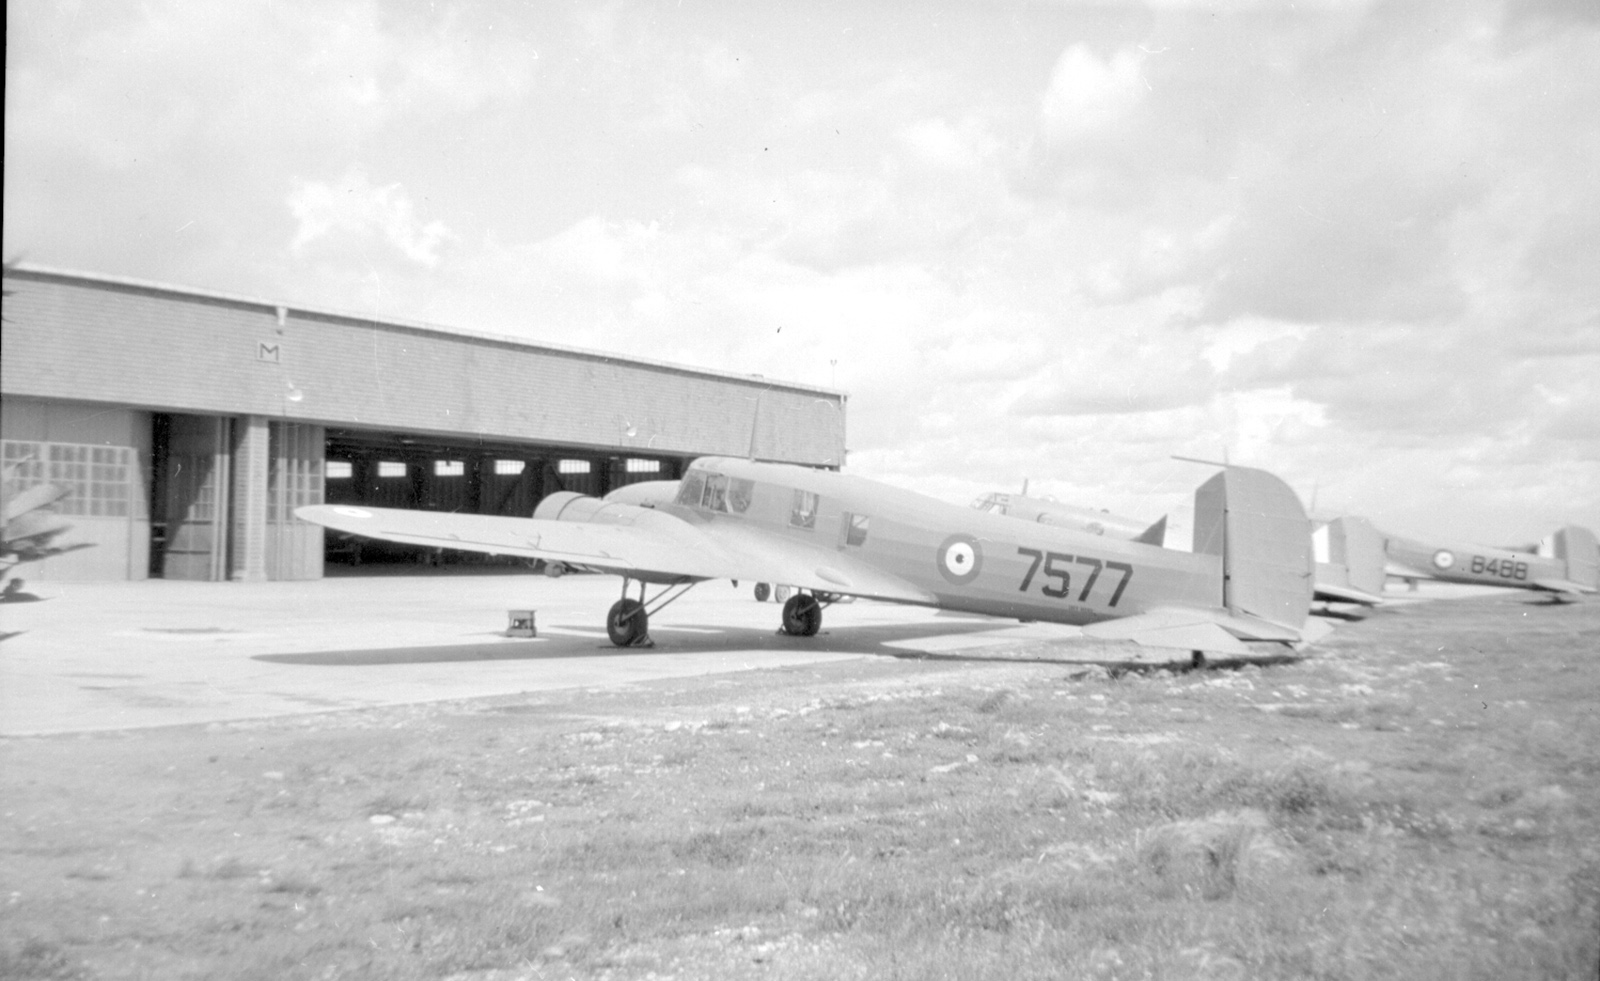 Anson in front of "M" Hangar, circa 1944